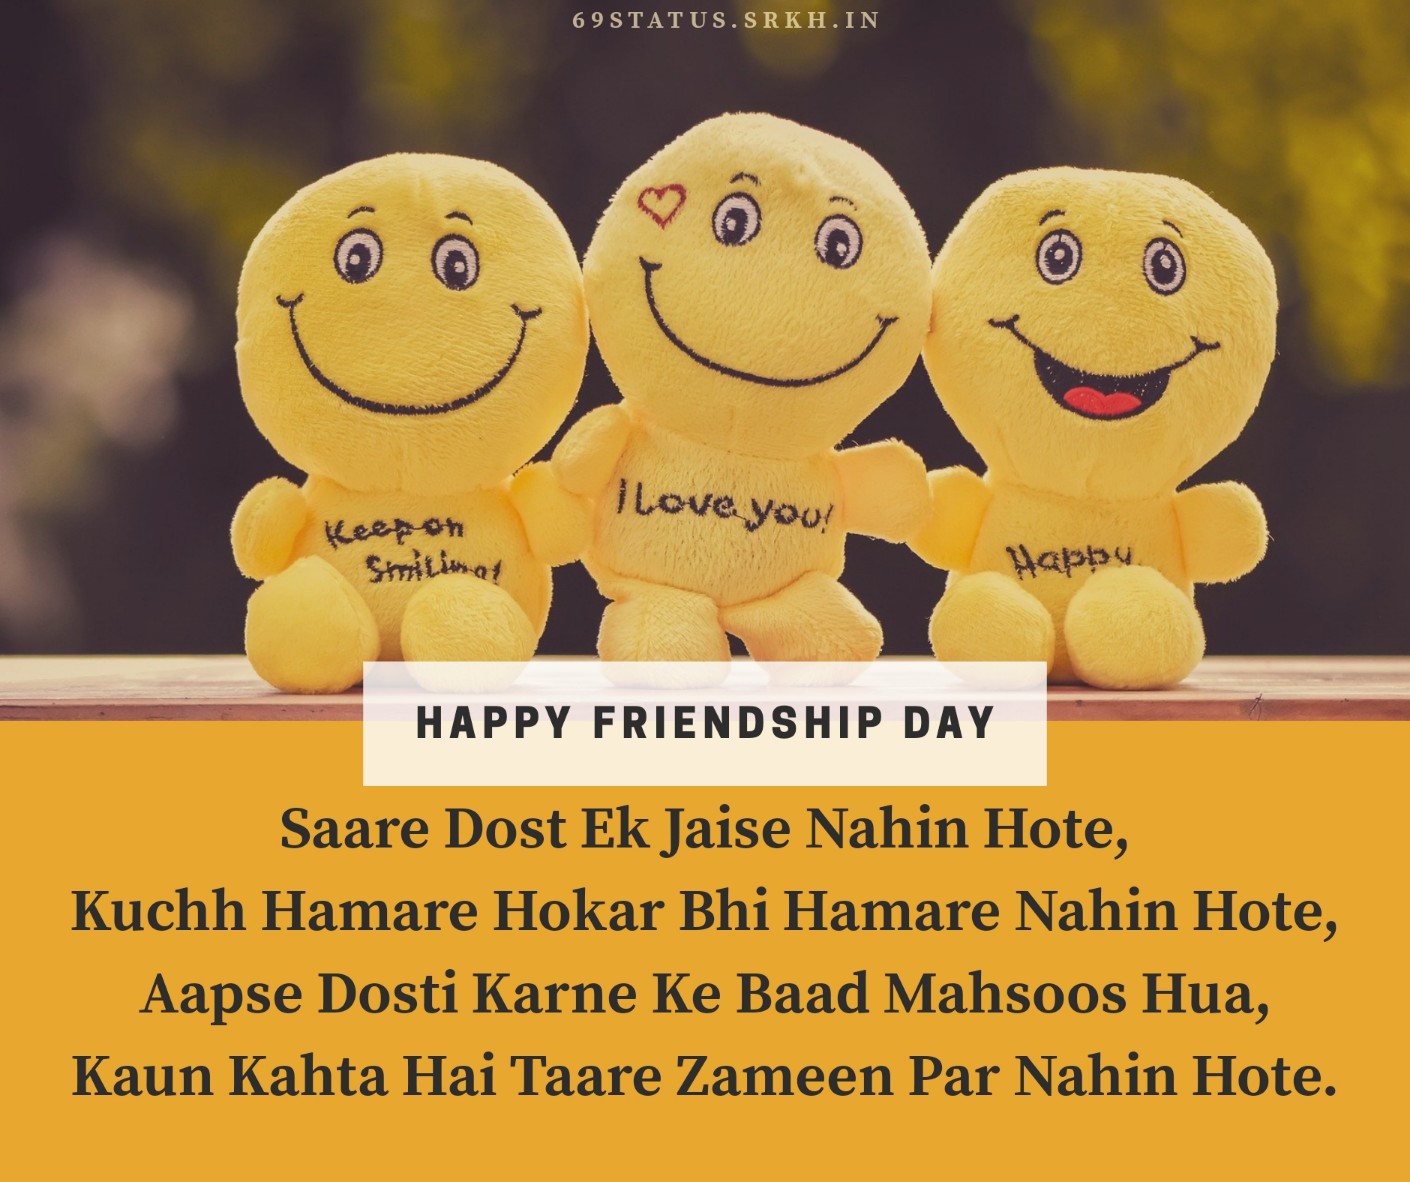  Friendship Day Shayari Pic HD Download free - Images SRkh